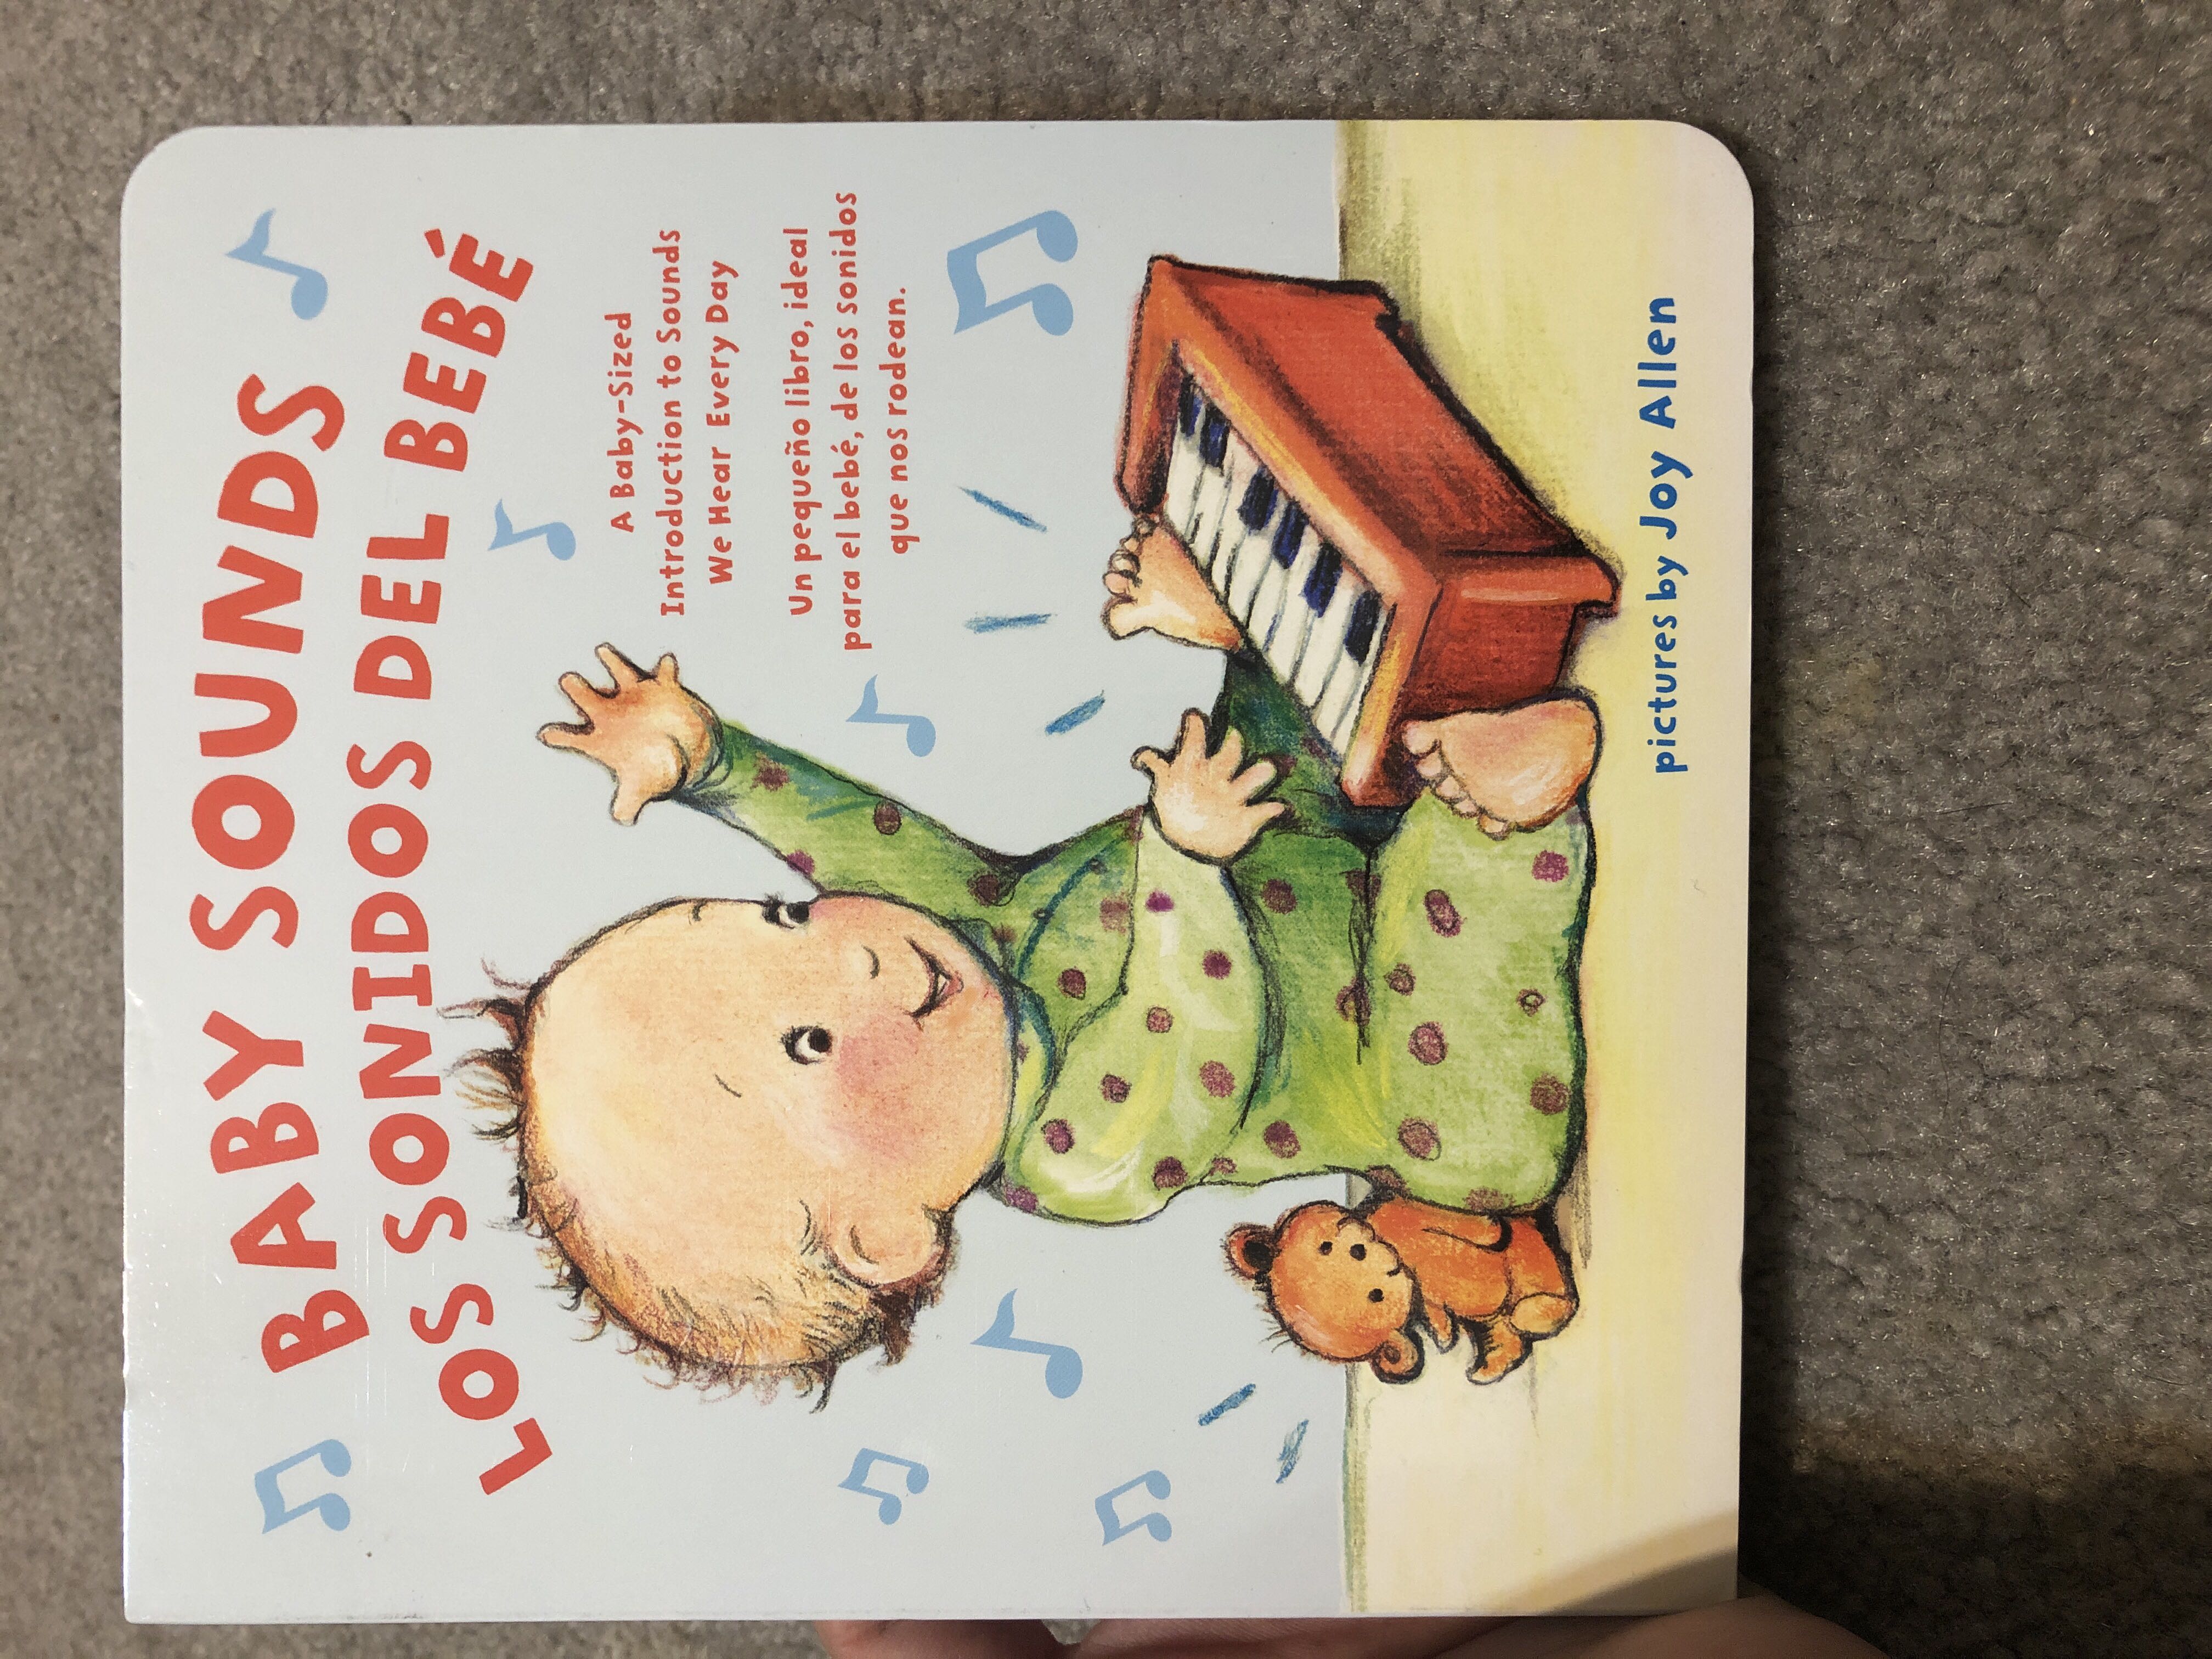 Baby Sounds Sonidos del bebé - Joy Allen (- Hardcover) book collectible [Barcode 9780399186691] - Main Image 1